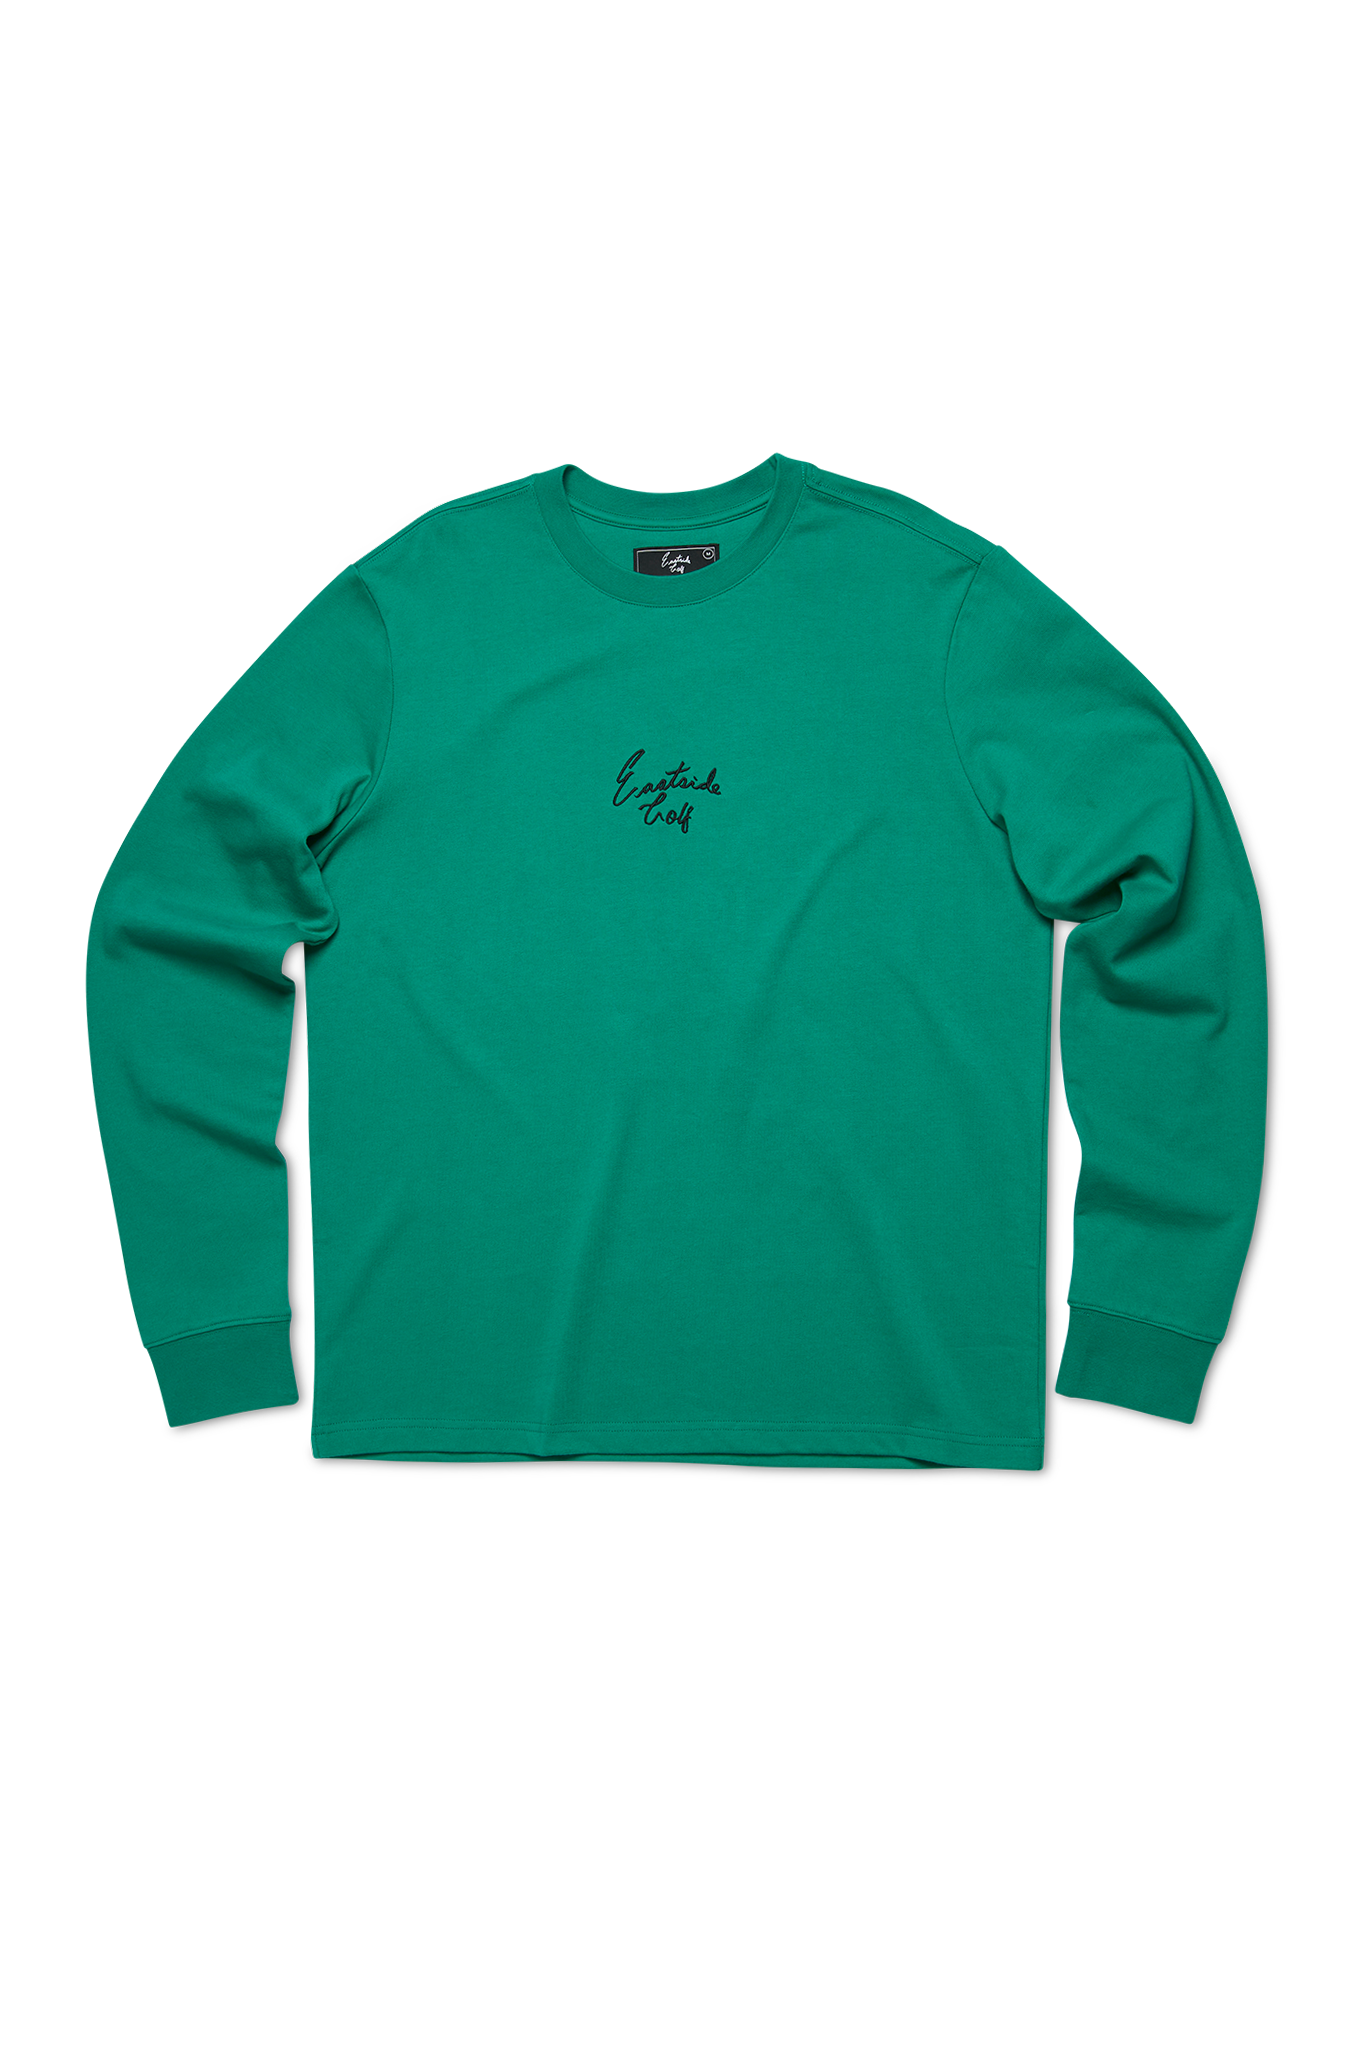 Eastside Golf Men's 1961 Change Honor Long Sleeve Graphic T-Shirt Golf Green